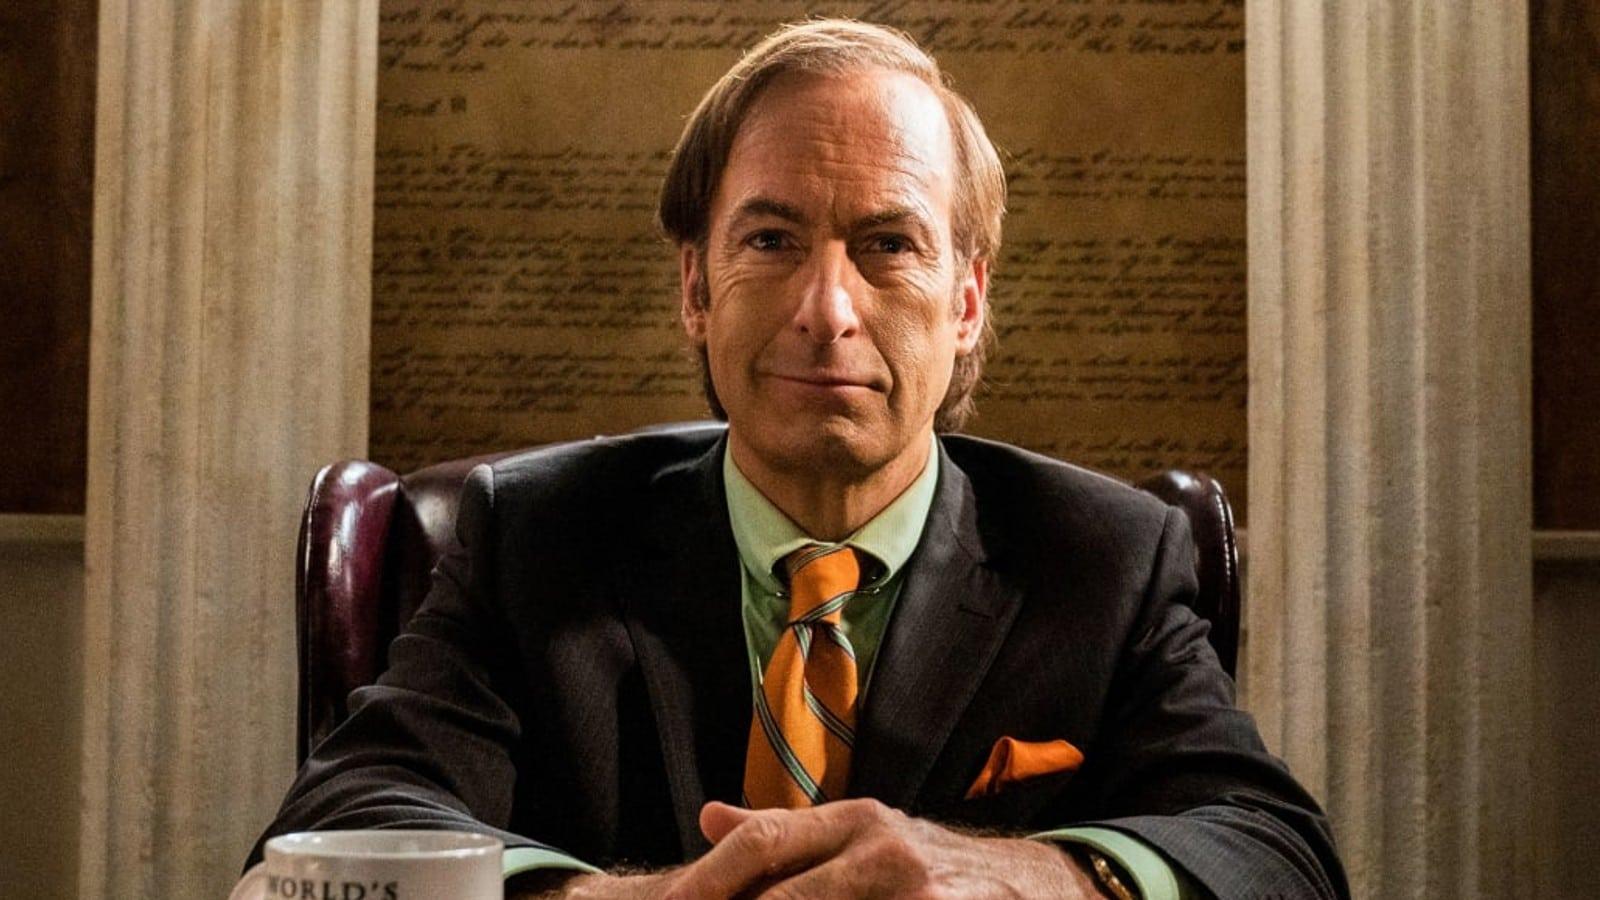 Bob Odenkirk in Better Call Saul